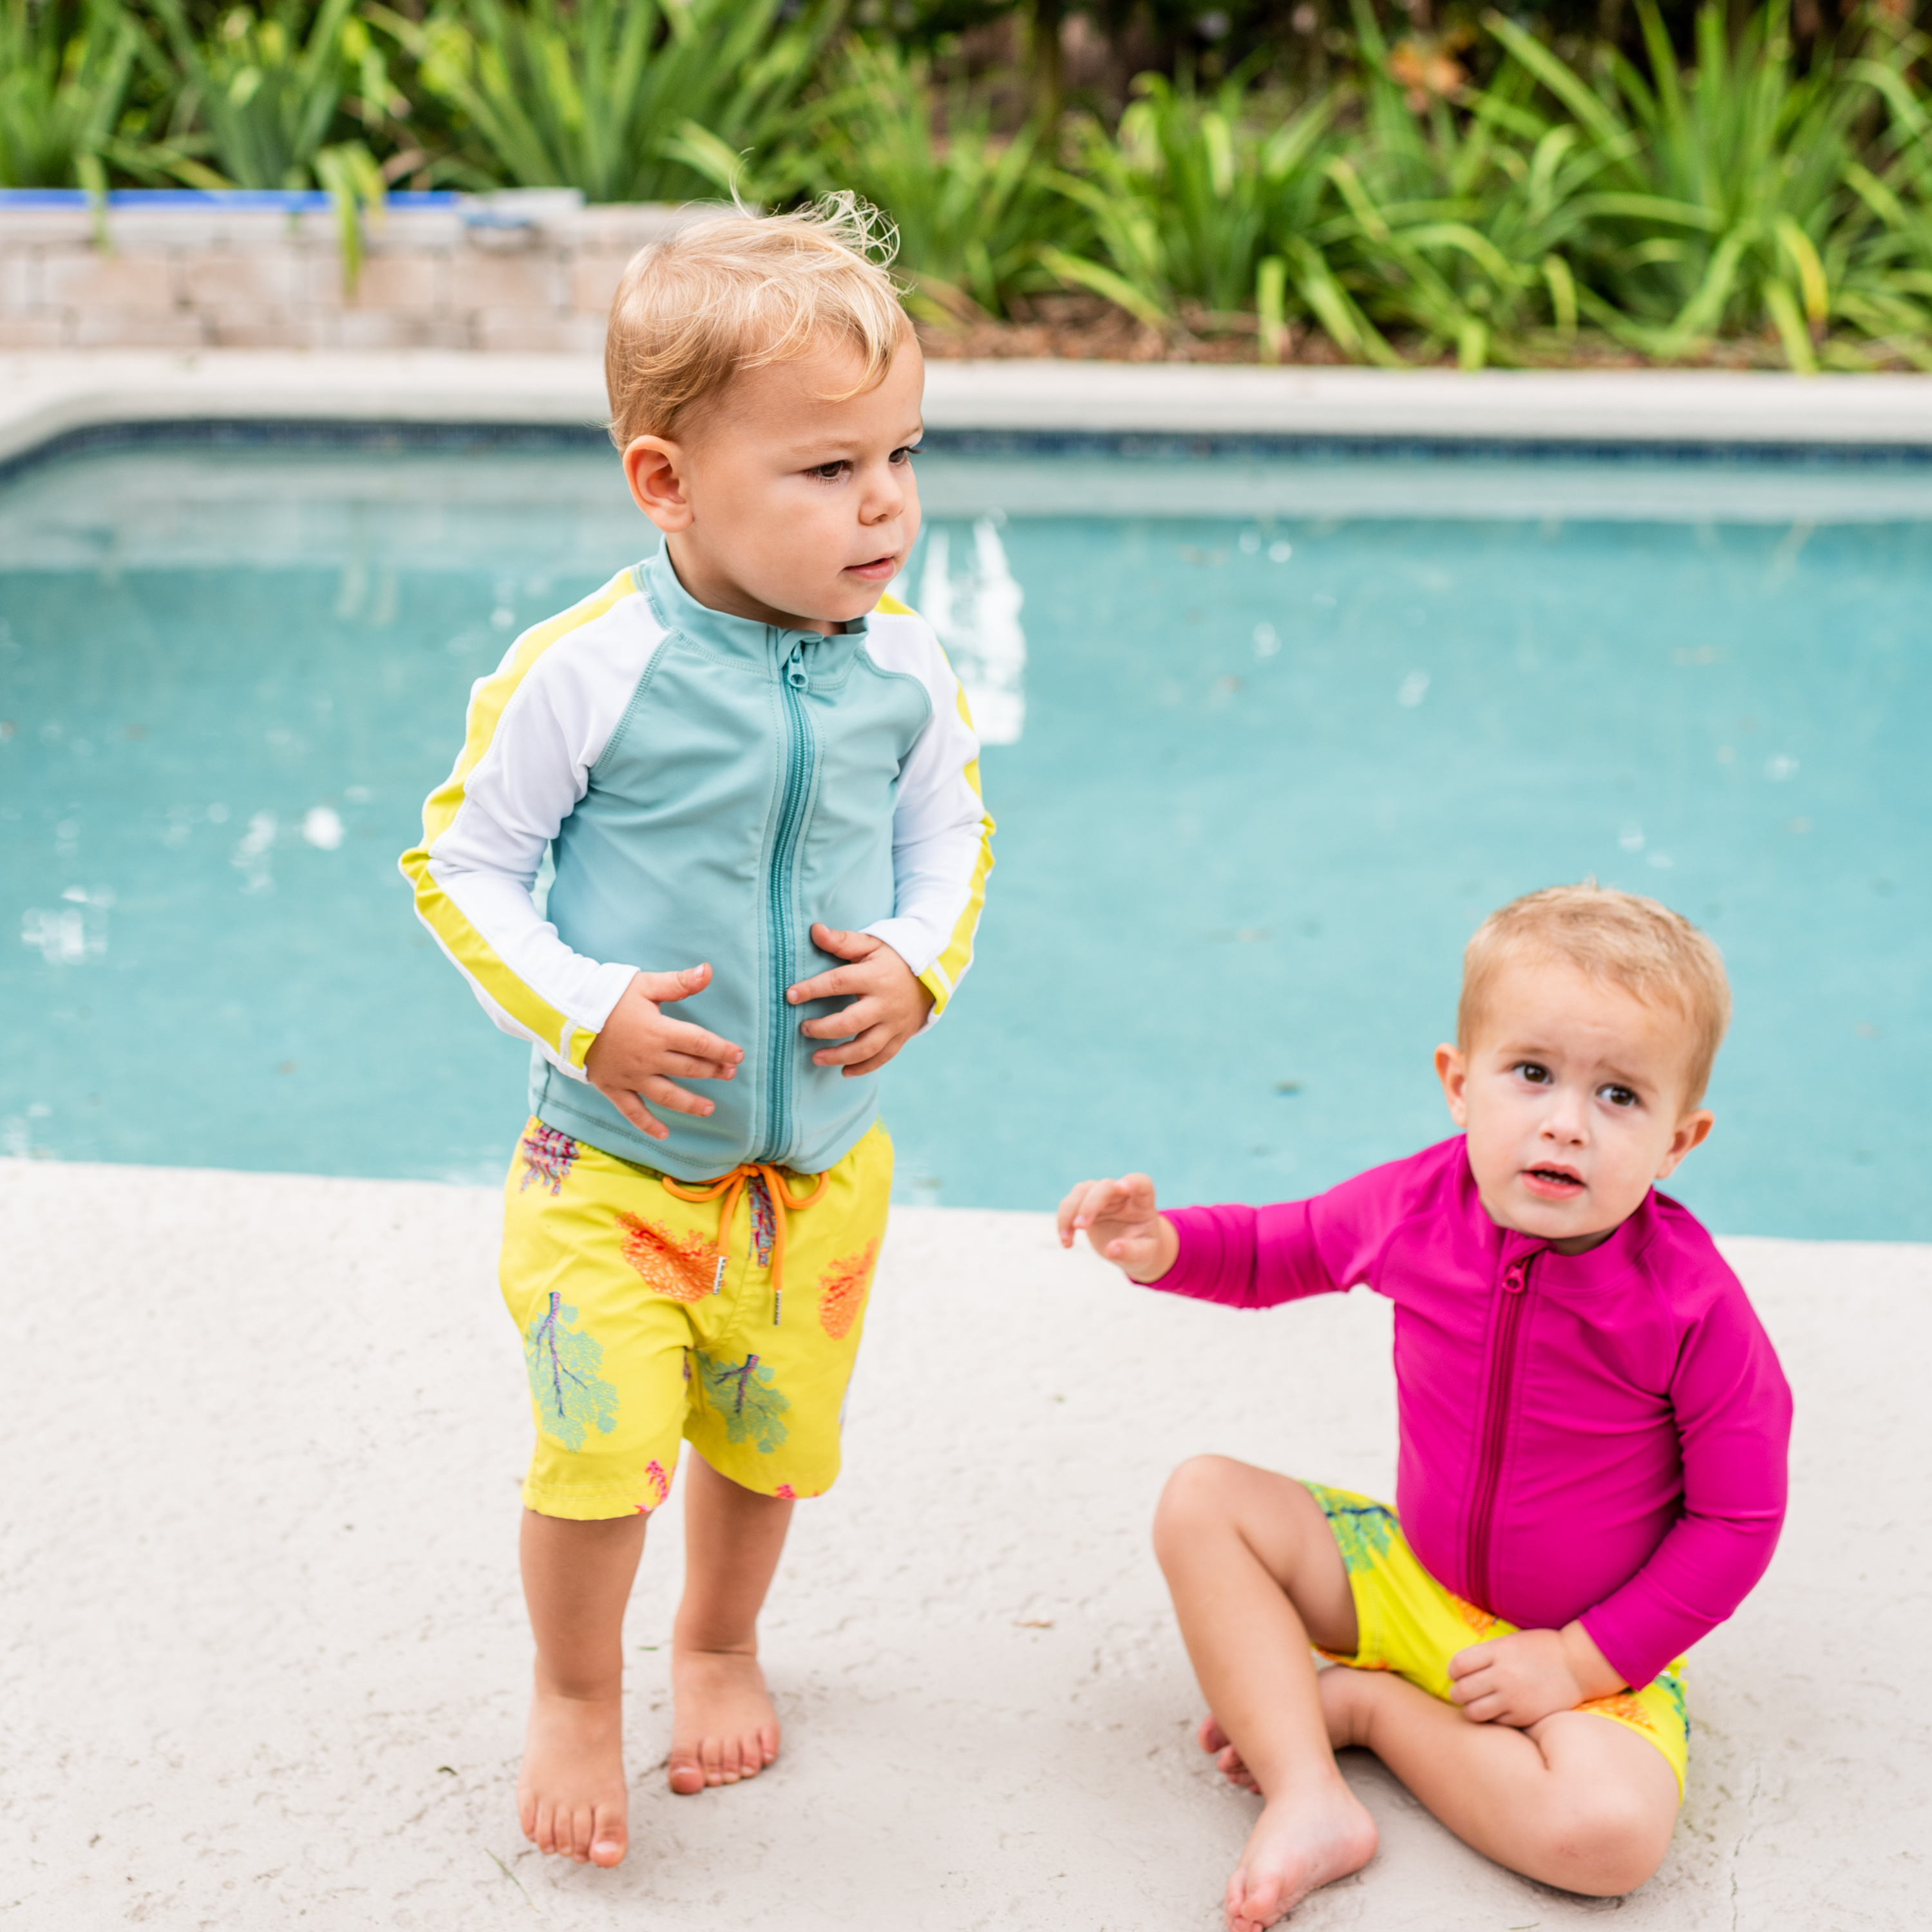 SwimZip Kids' Long Sleeve Rash Guard + Euro Shorties UPF 50+ Swimsuit Set  Black/Blue - Yahoo Shopping